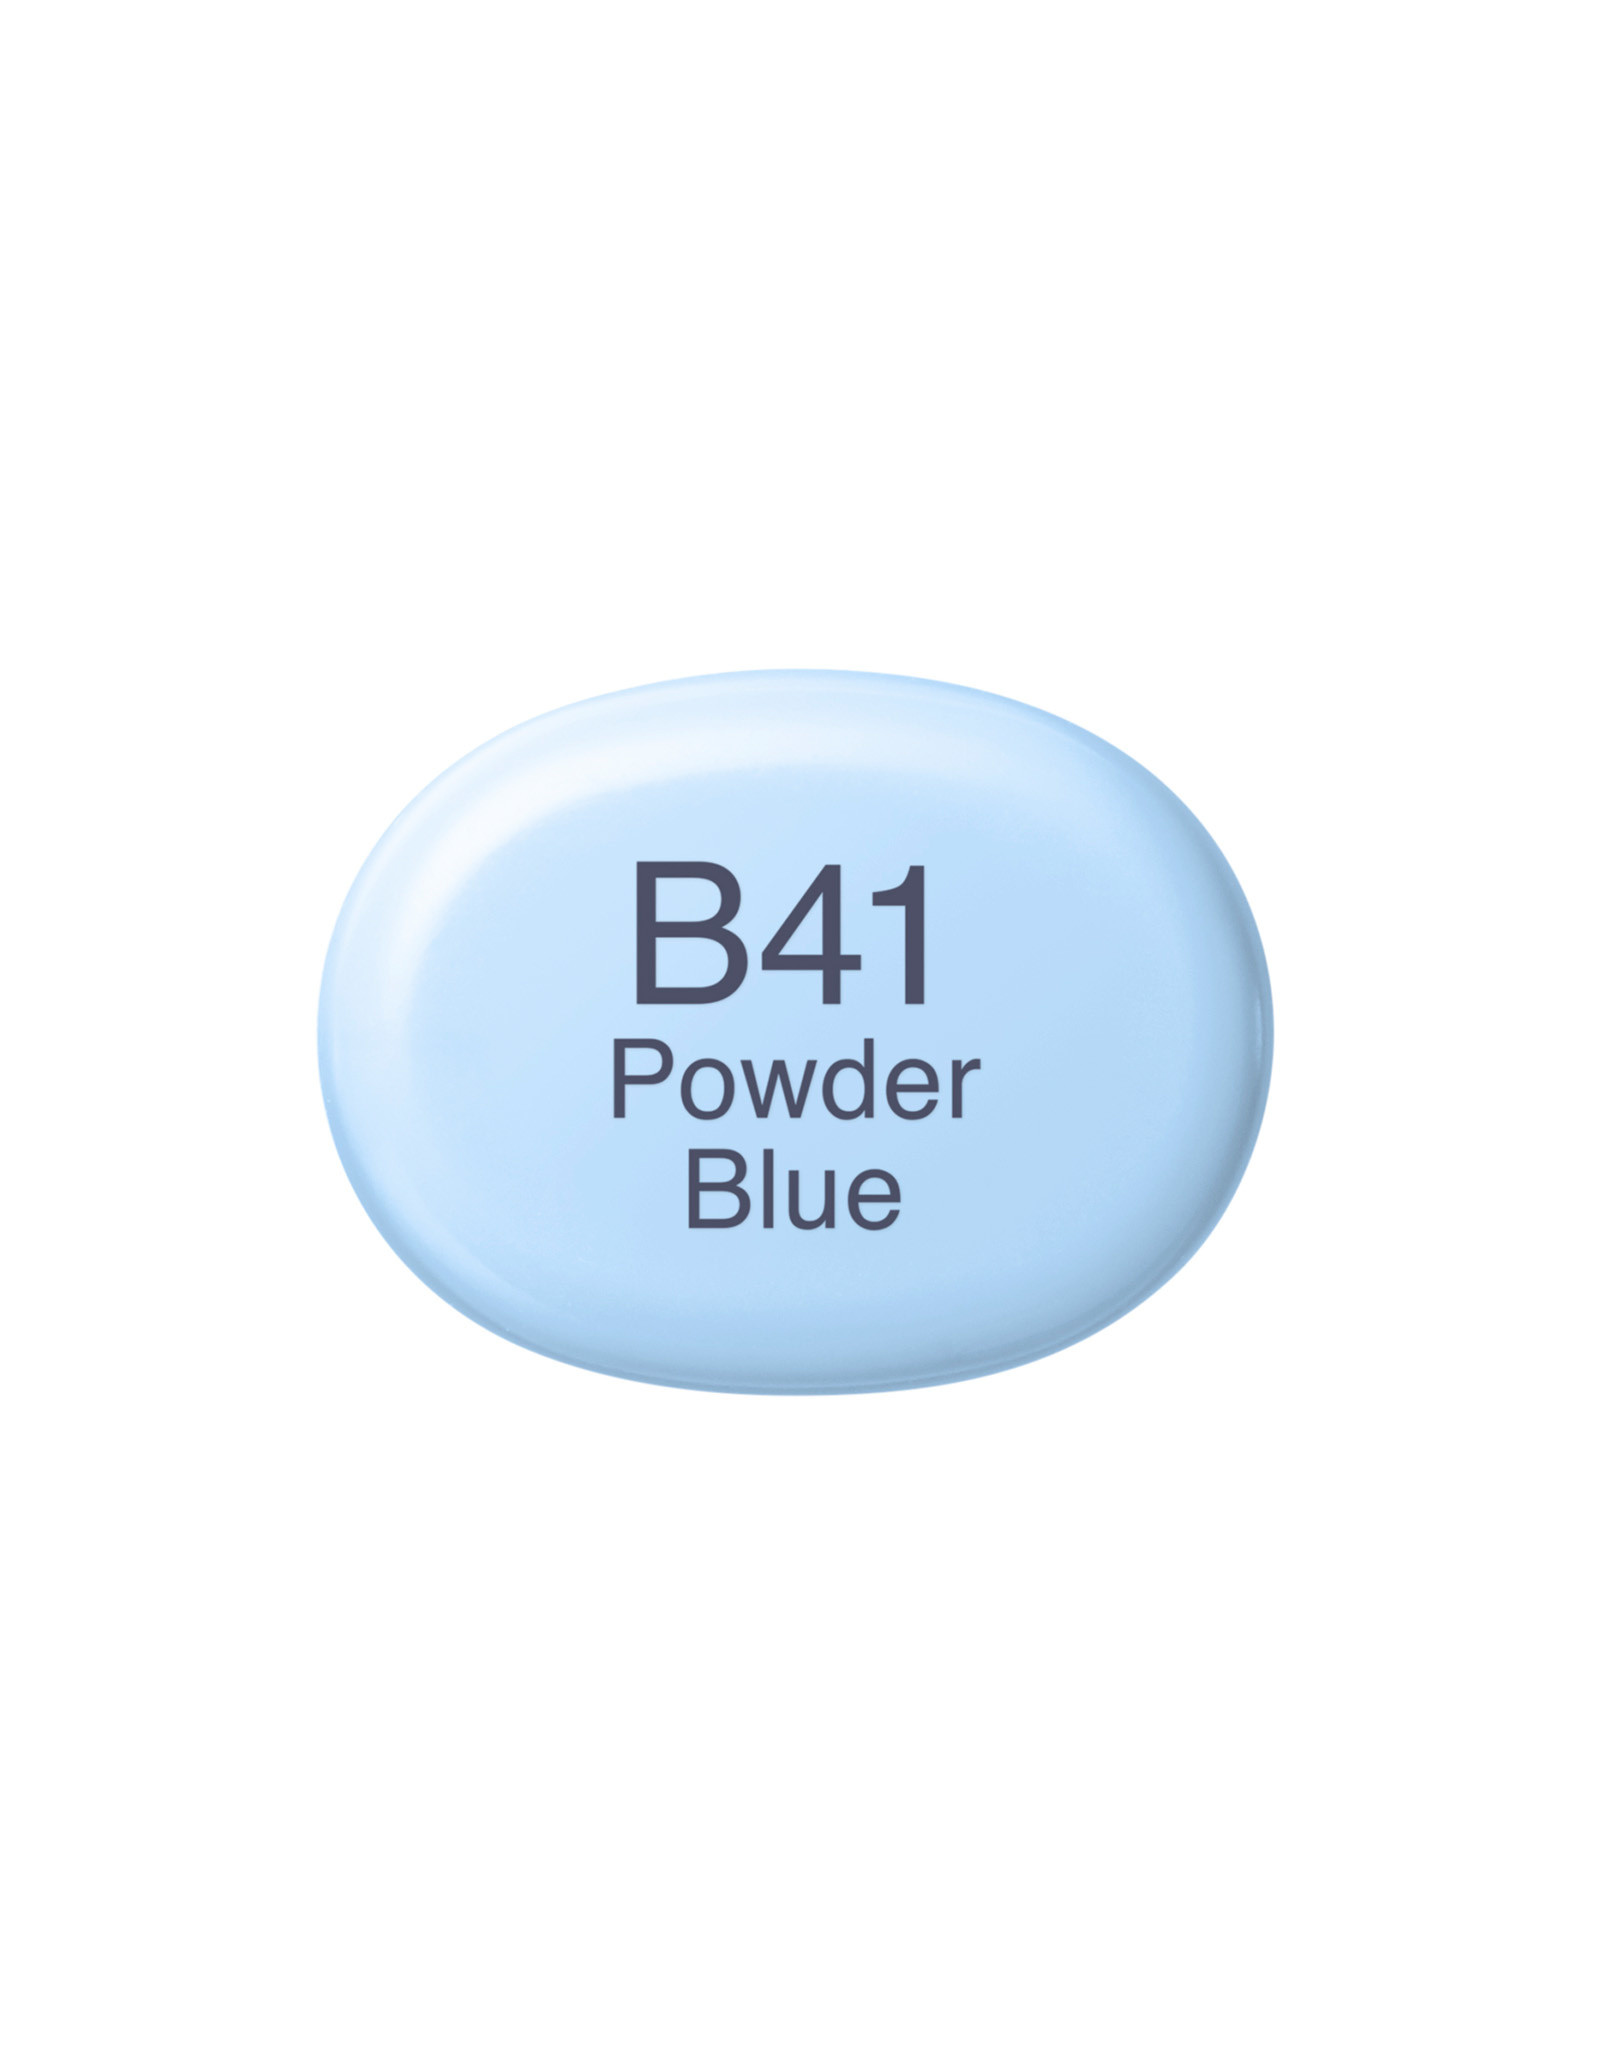 COPIC COPIC Sketch Marker B41 Powder Blue